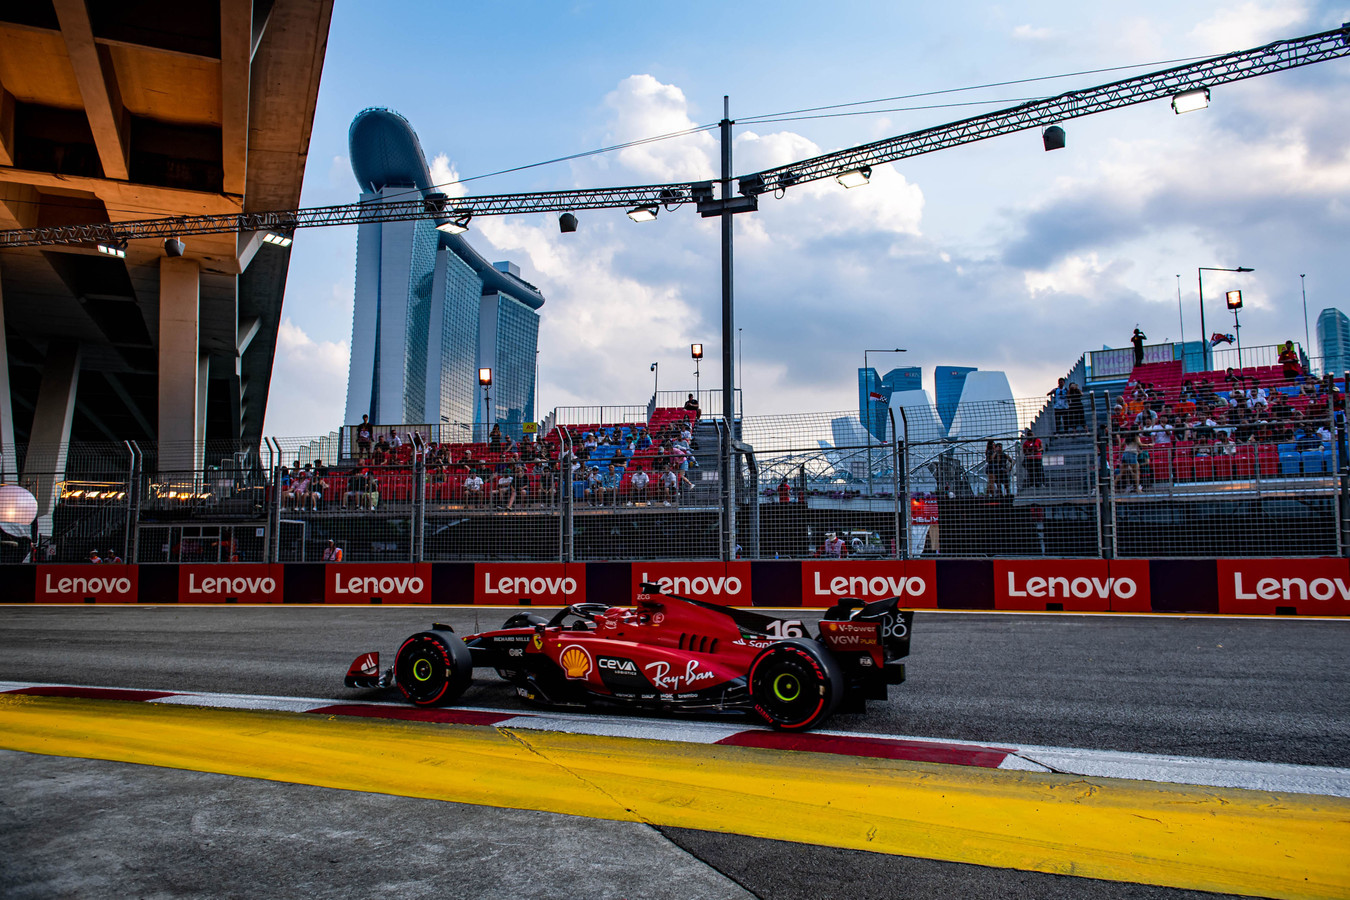 Charles Leclerc (16) runs practice laps in his Ferrari at the Marina Bay Street Circuit for the Formula 1 Singapore Grand Prix